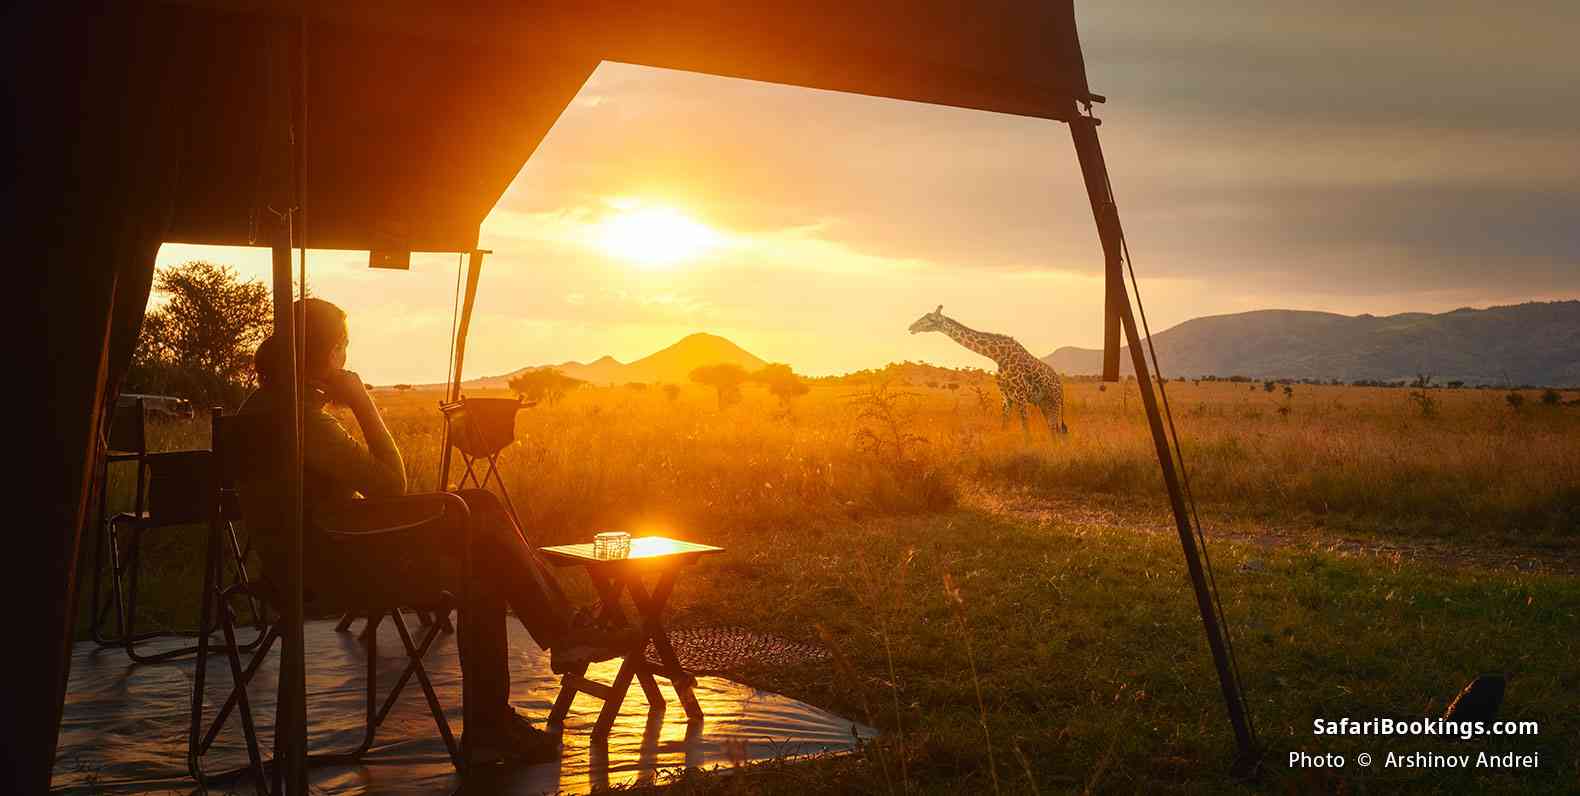 Giraffe walking past a safari tent at sunset in Serengeti National Park